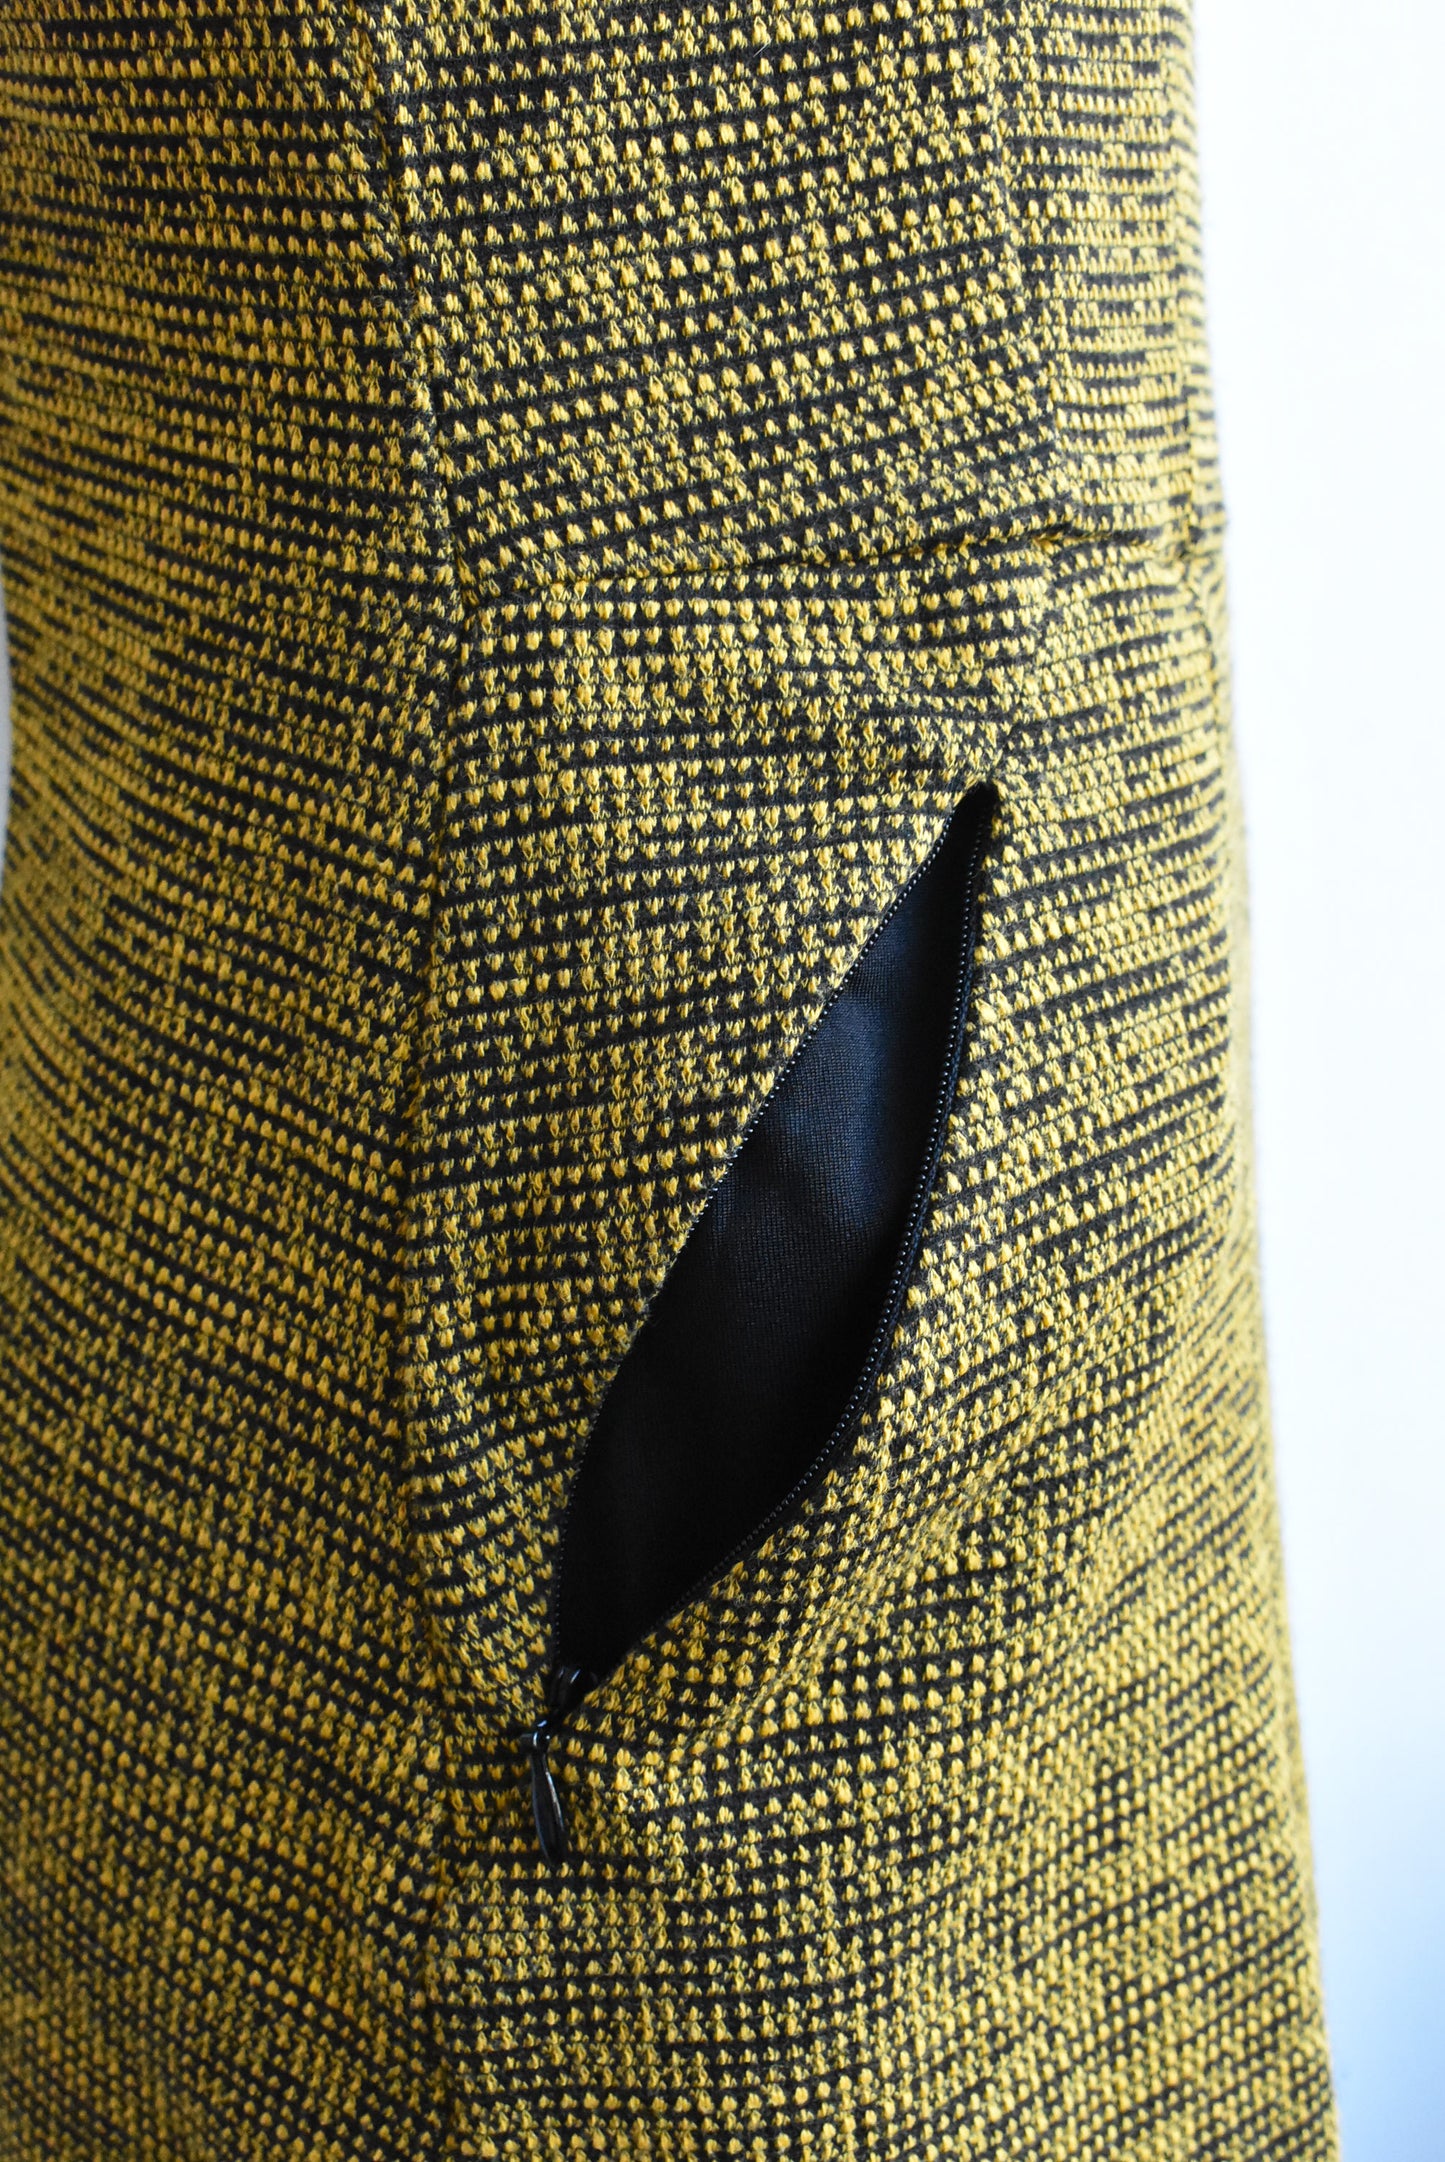 H&M black & yellow sheath dress, size S